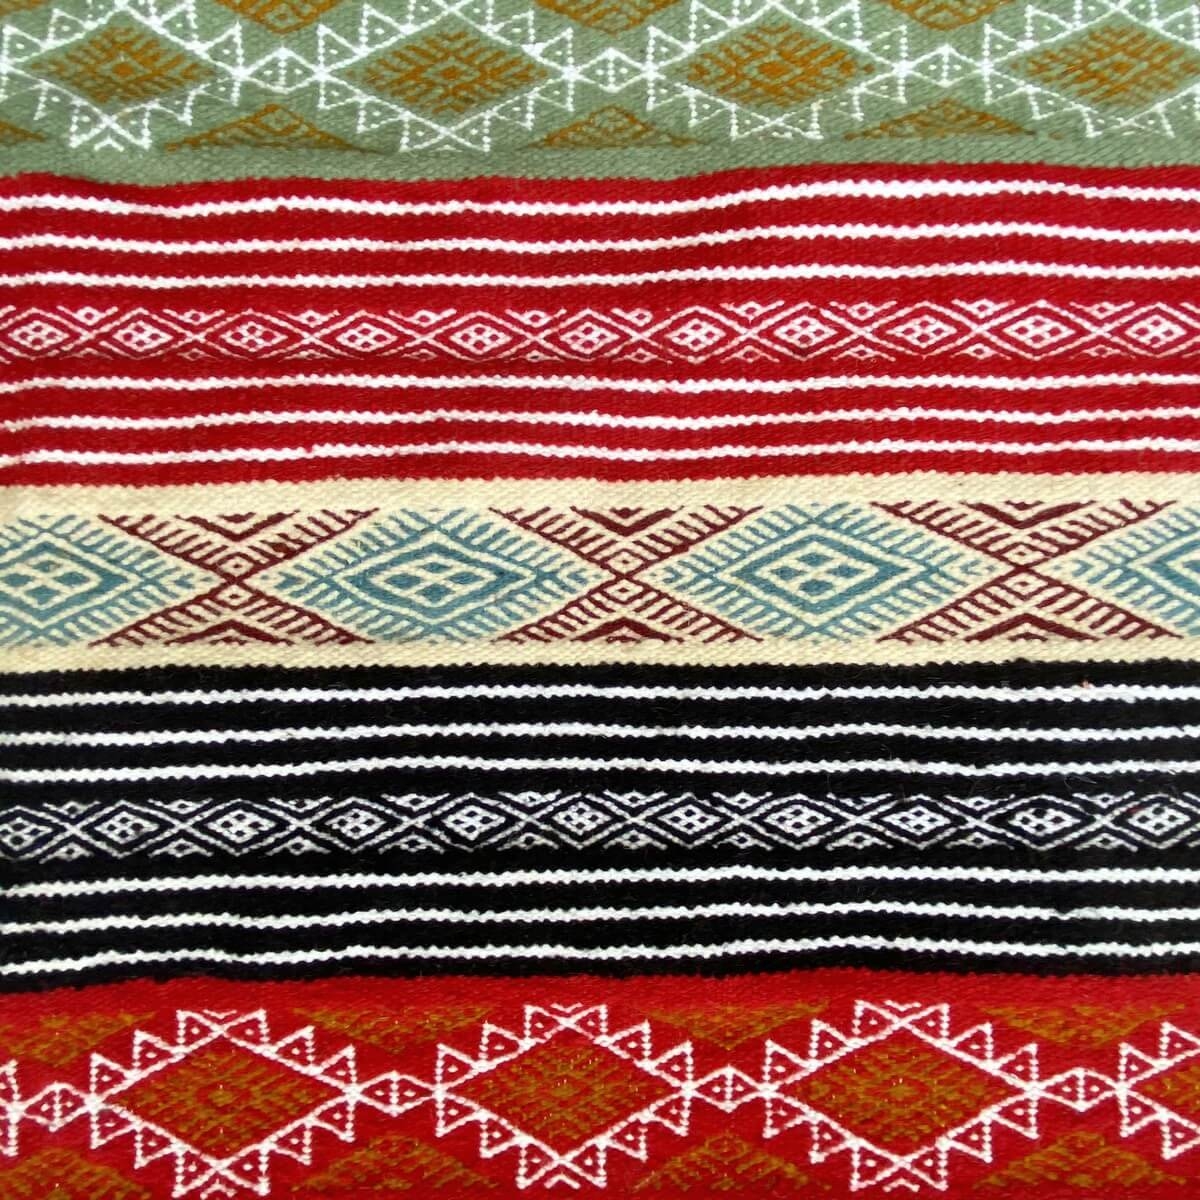 Berber tapijt Tapijt Kilim Nemzi 118x192 Veelkleurig (Handgeweven, Wol, Tunesië) Tunesisch kilimdeken, Marokkaanse stijl. Rechth